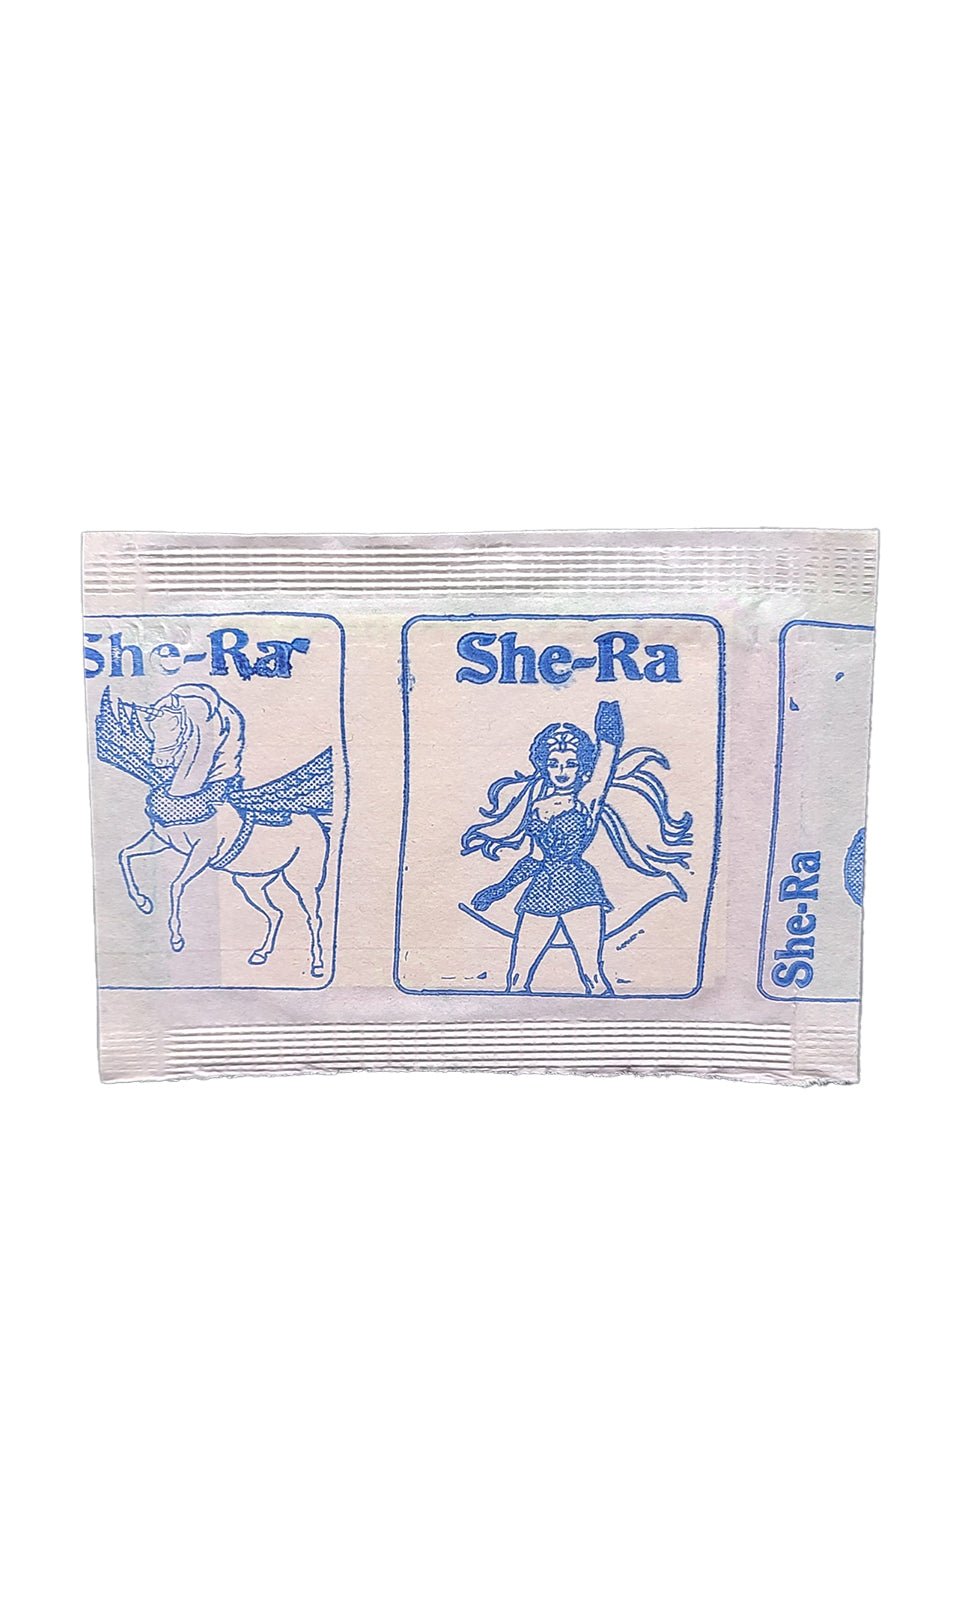 1986 She-Ra: Princess of Power Panini Reyauca - Venezuela 1-Panel Sticker Pack Masters of the Universe Sealed Pack - Hobby Gems